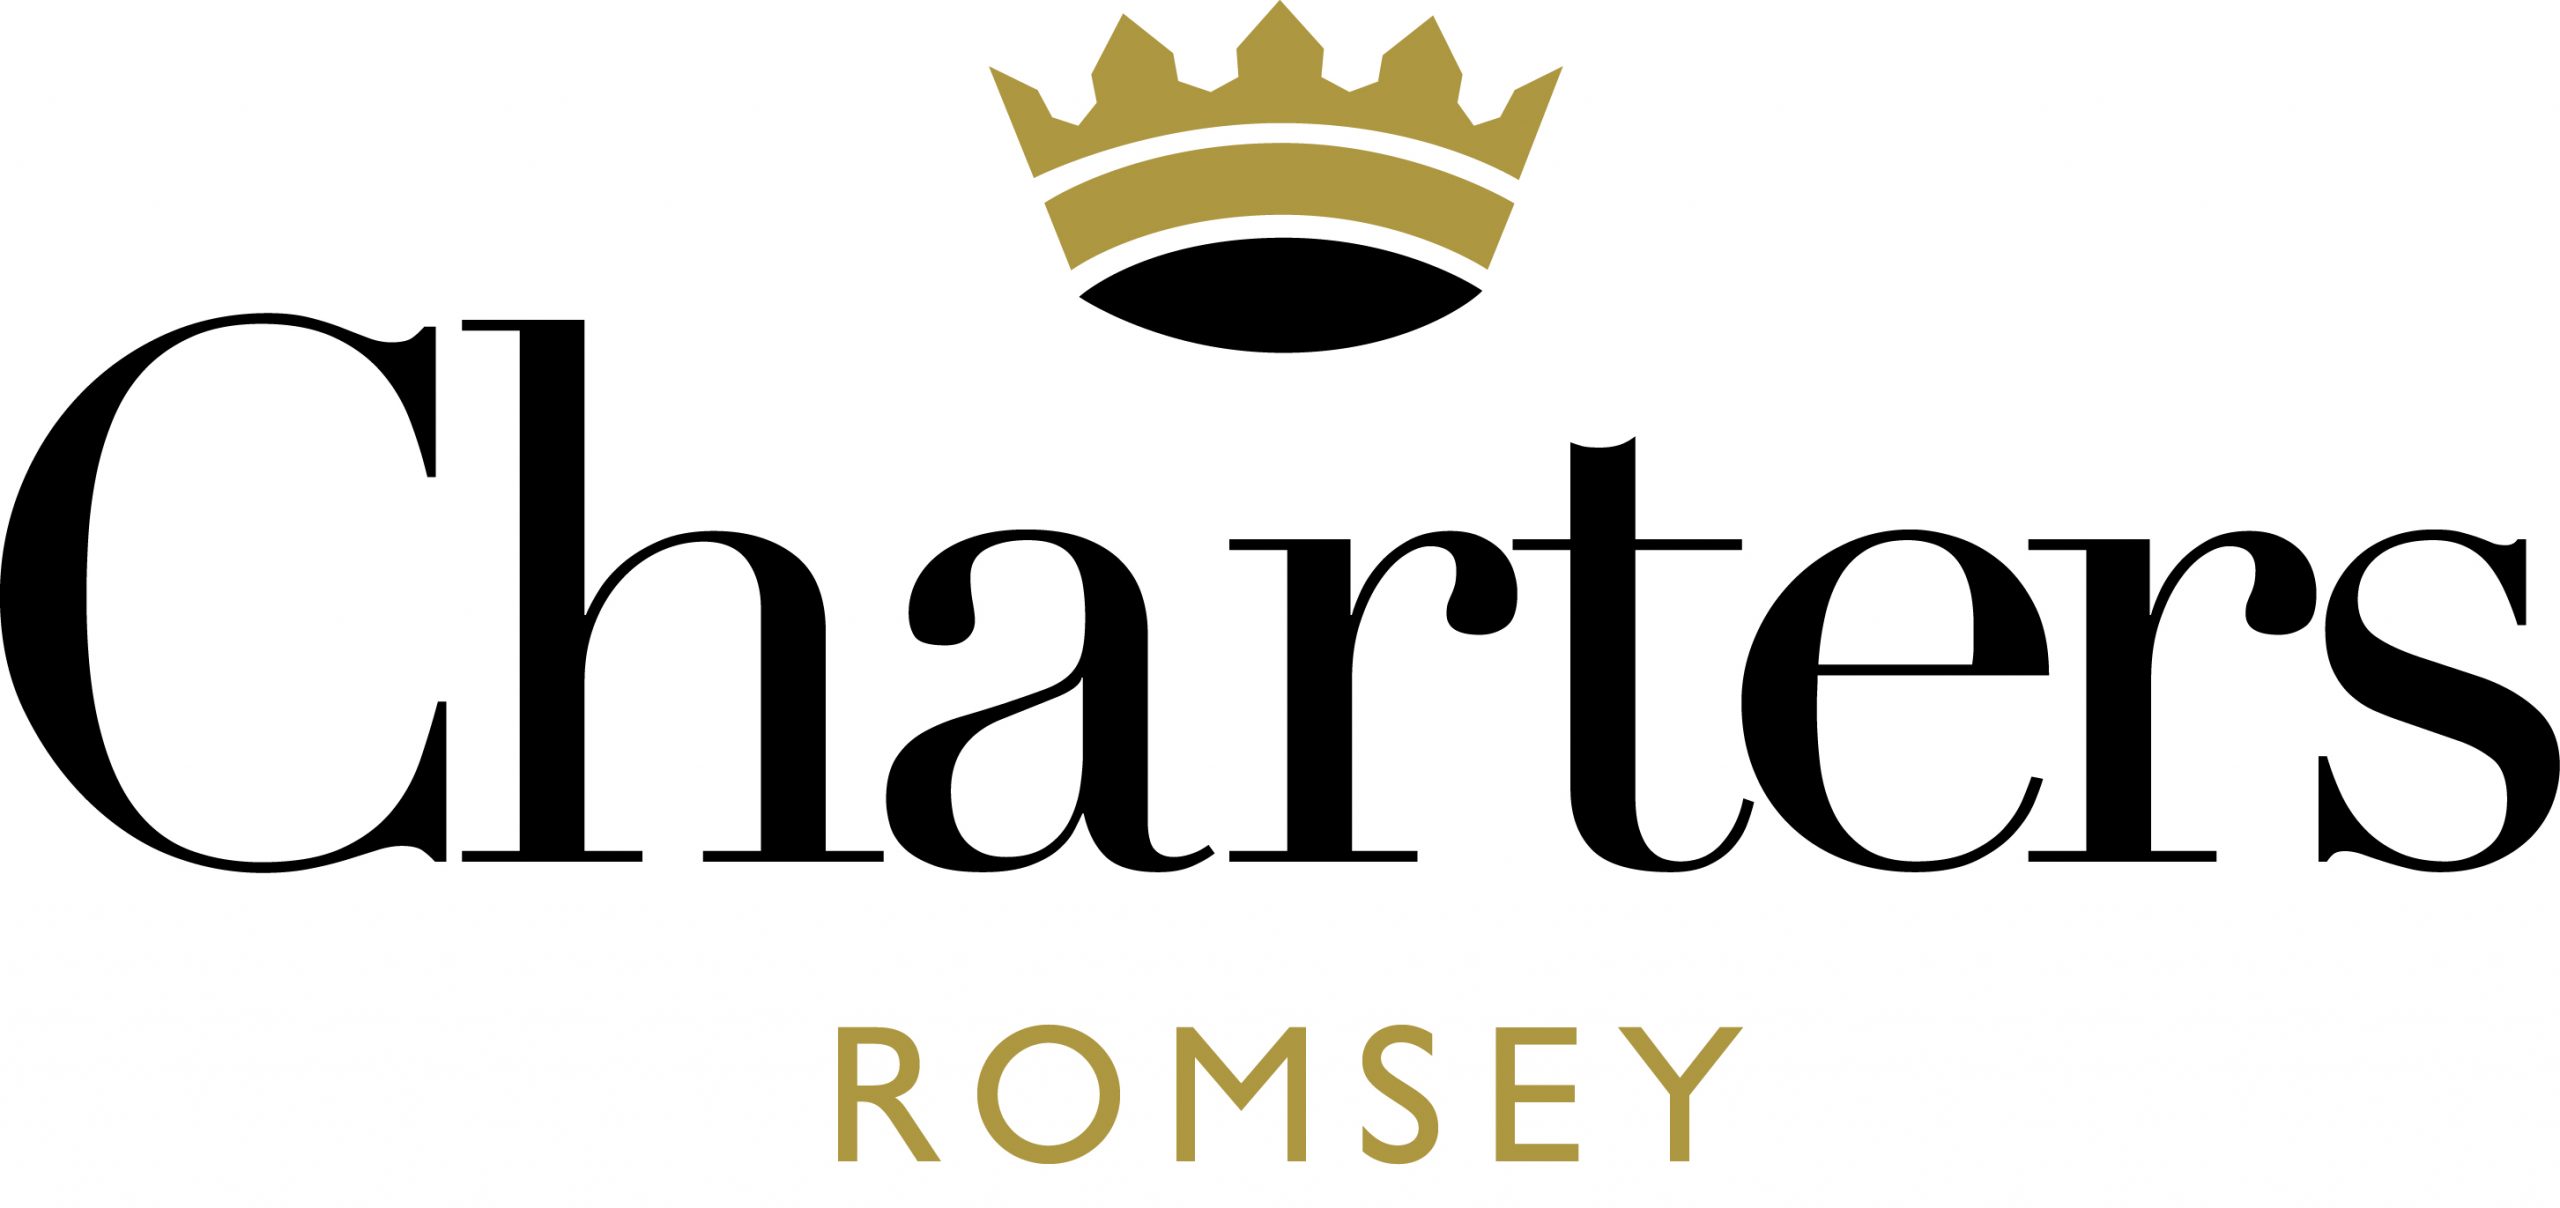 charters_new_romsey_logo_white-1-scaled.jpg